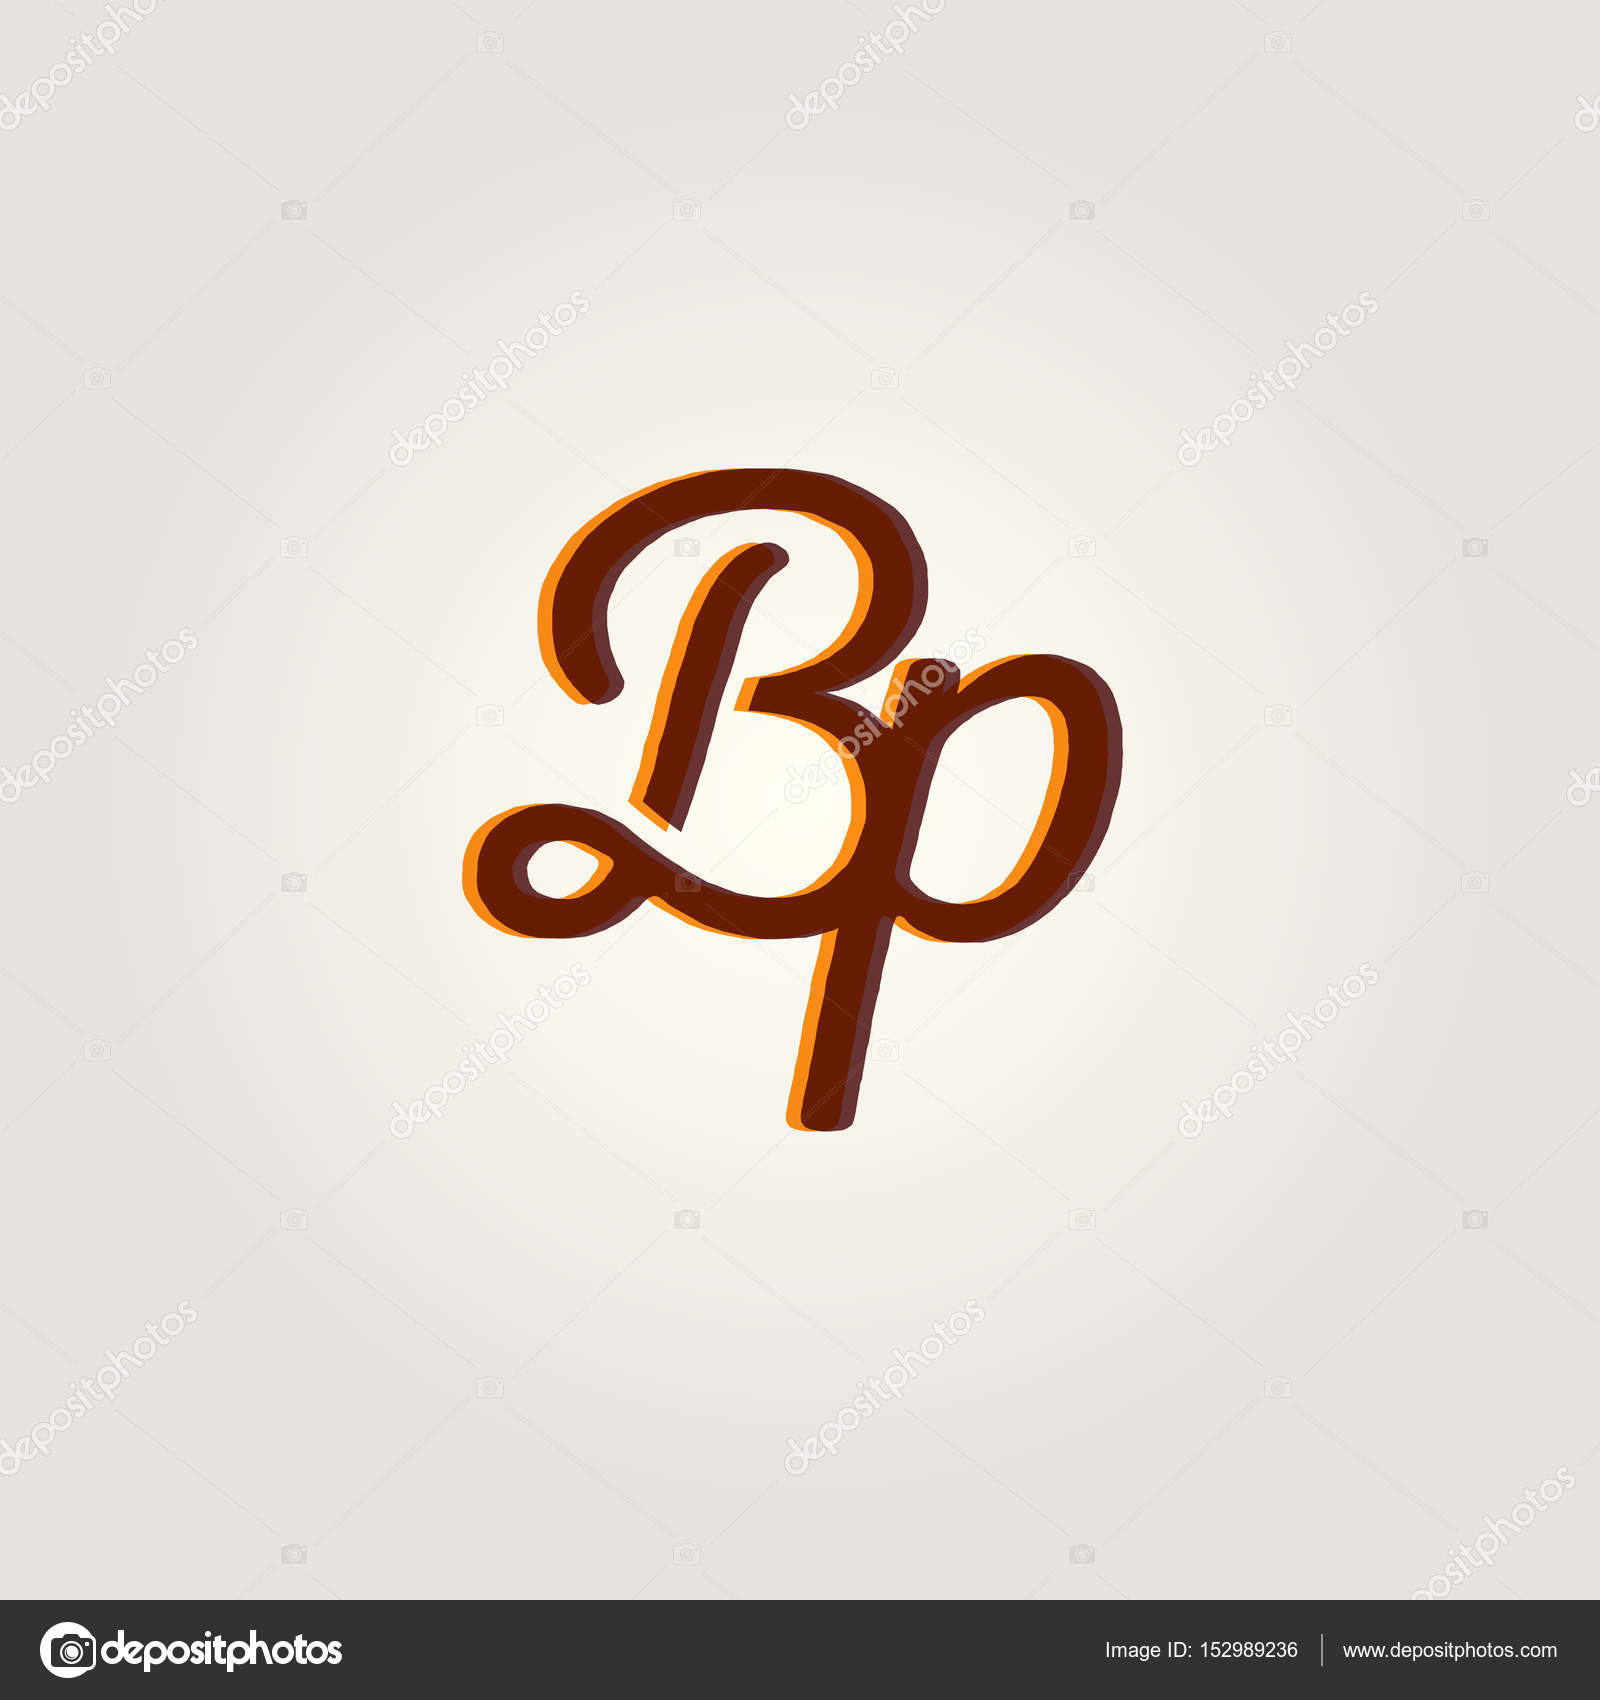 Logo designed by the letter BP